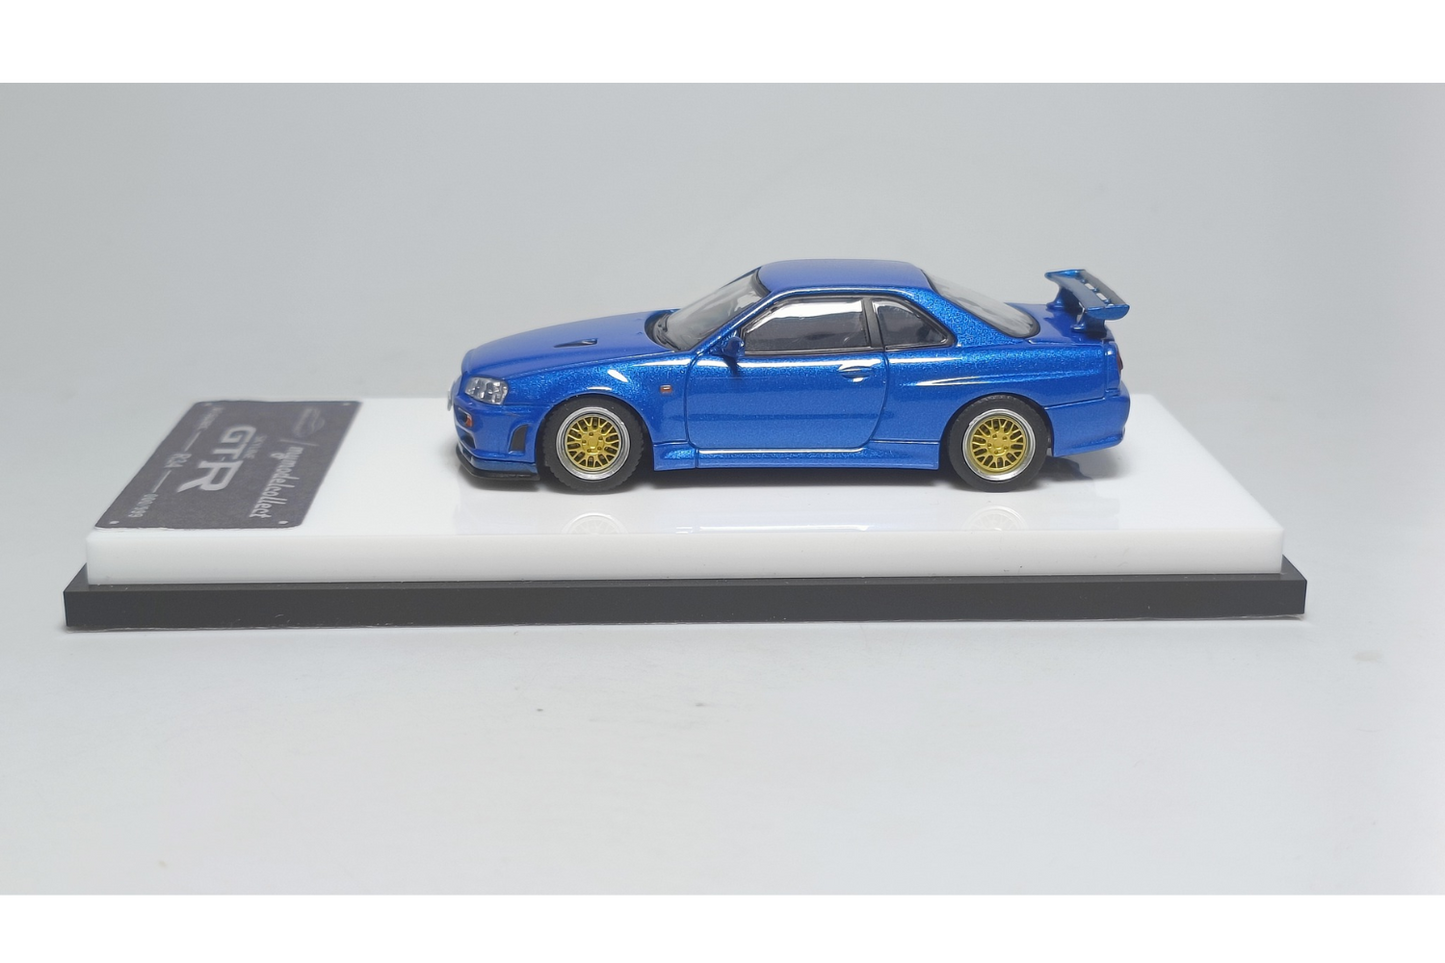 MC 1/64 Nissan Skyline GT-R V-Spec (R34) in Bayside Blue